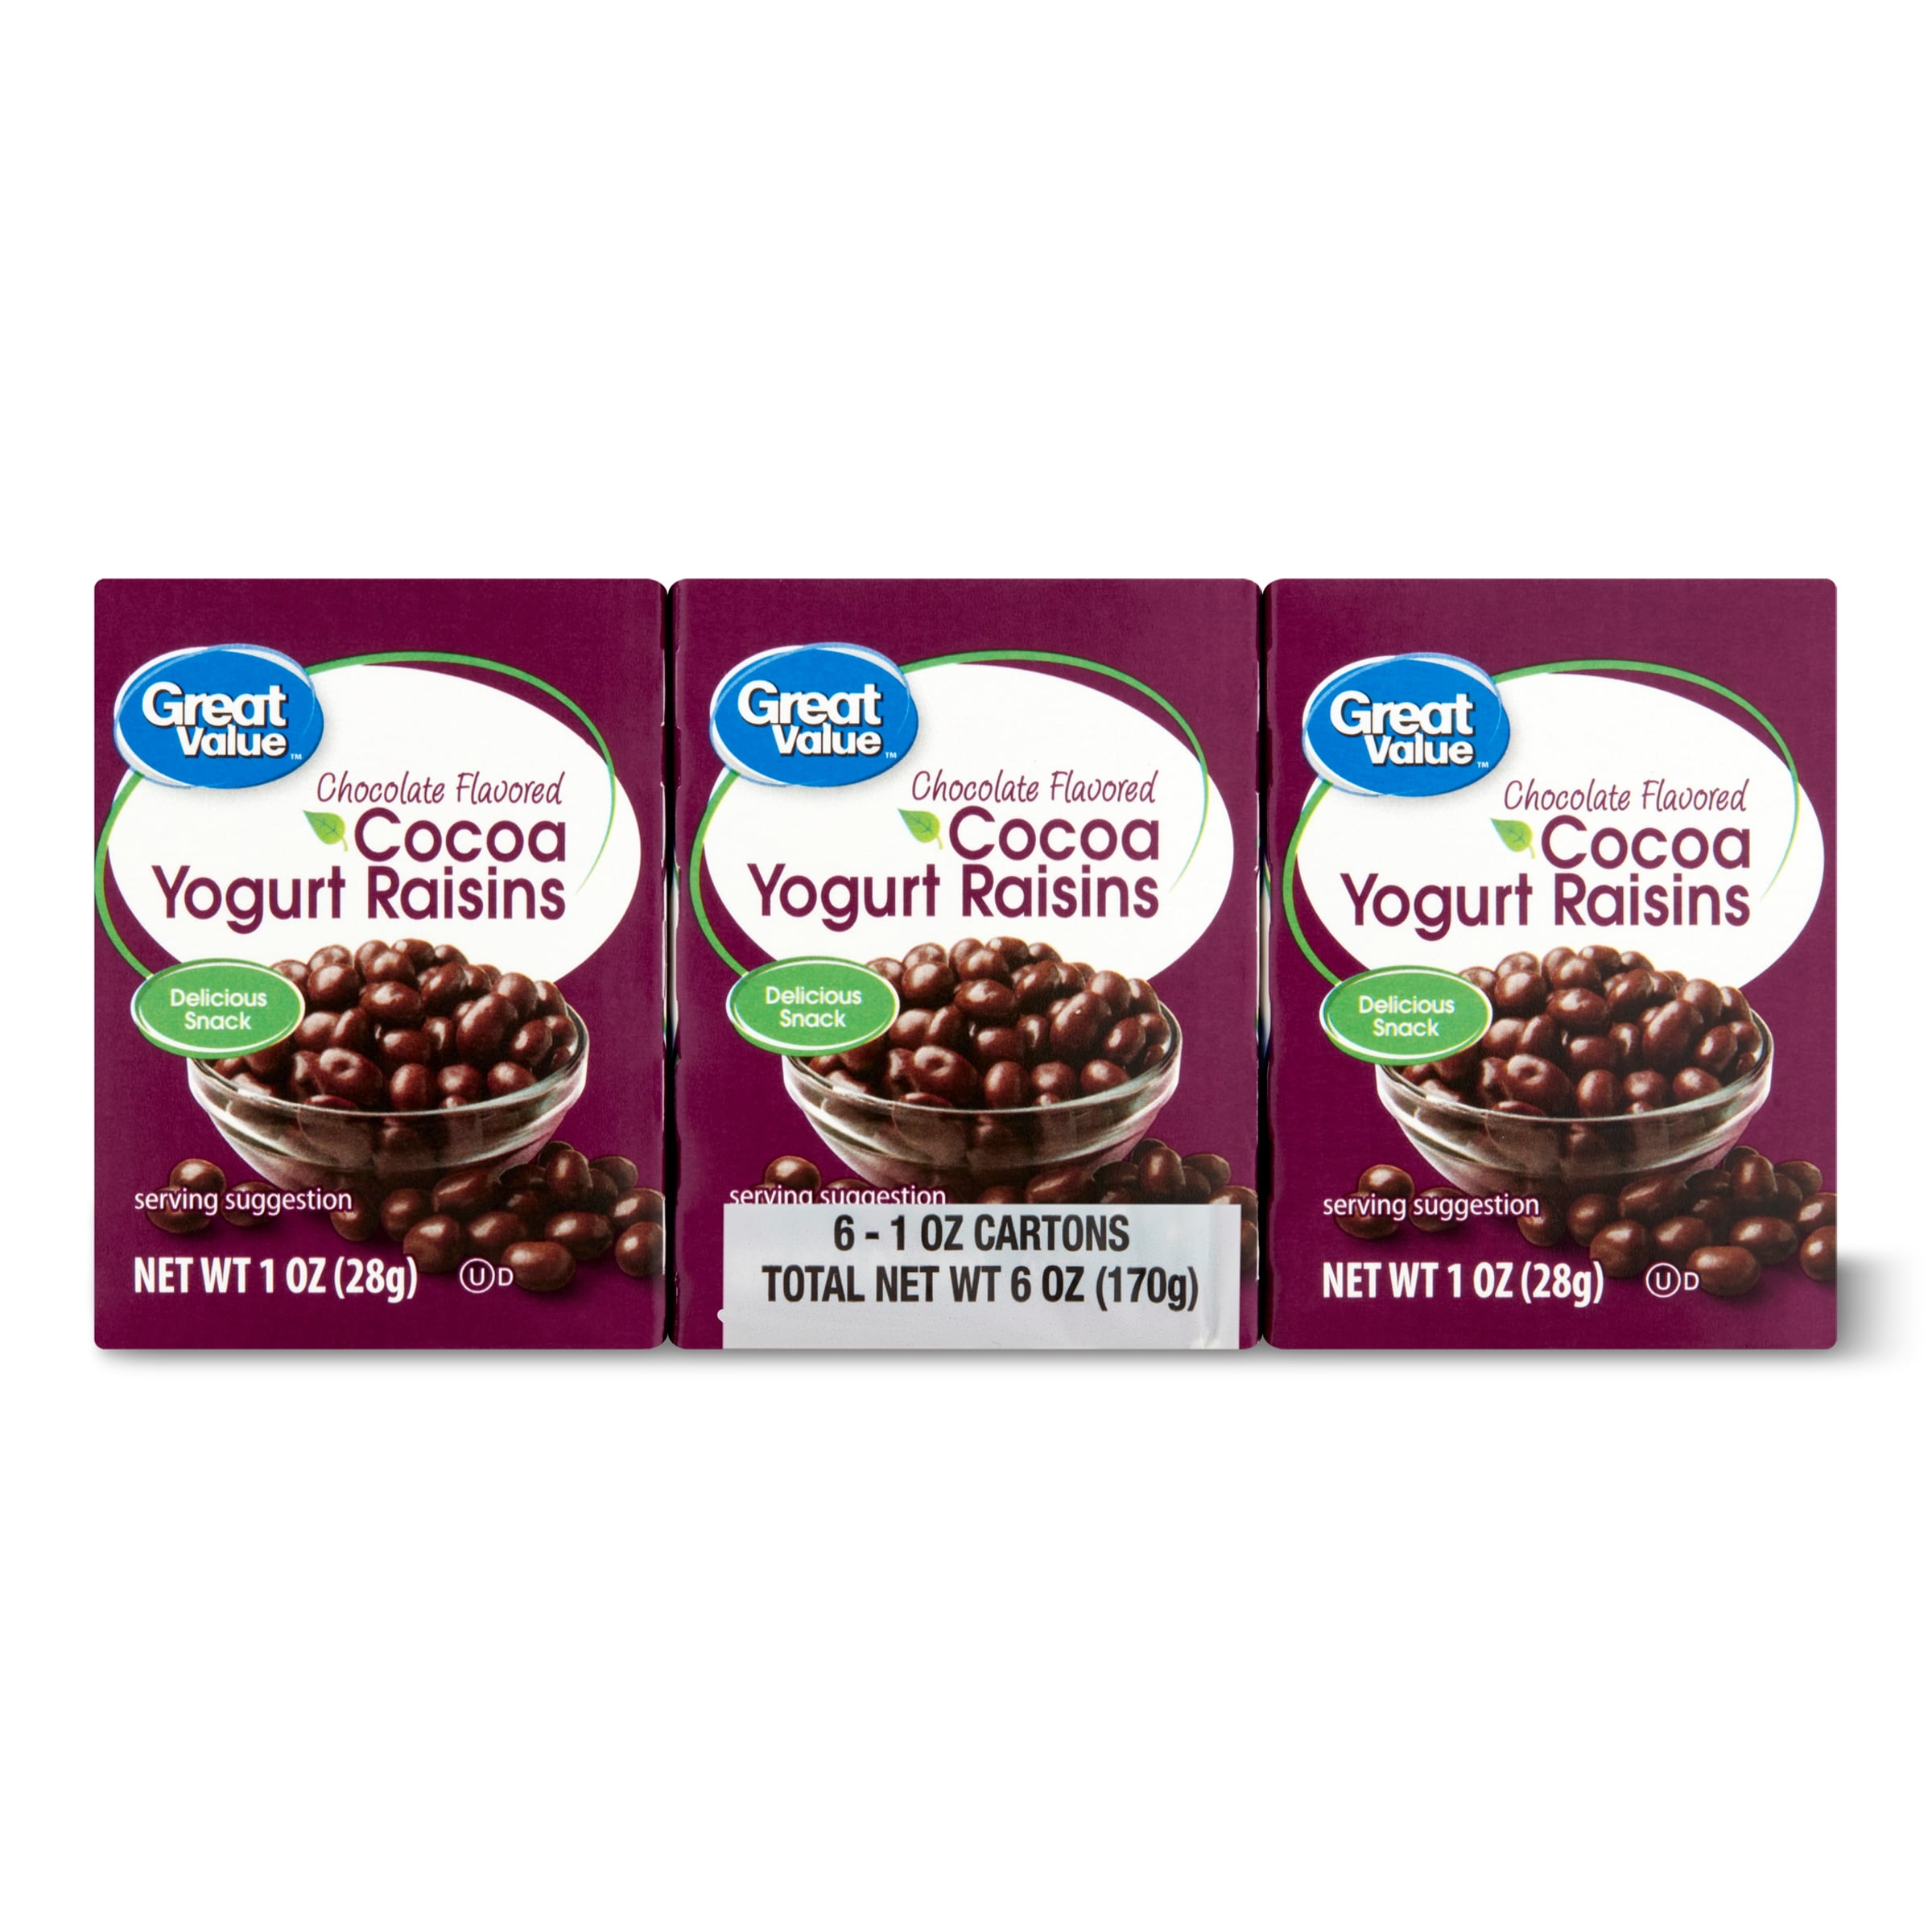 Great Value Chocolate Flavored Cocoa Yogurt Raisins, 1 Oz, 6 Count